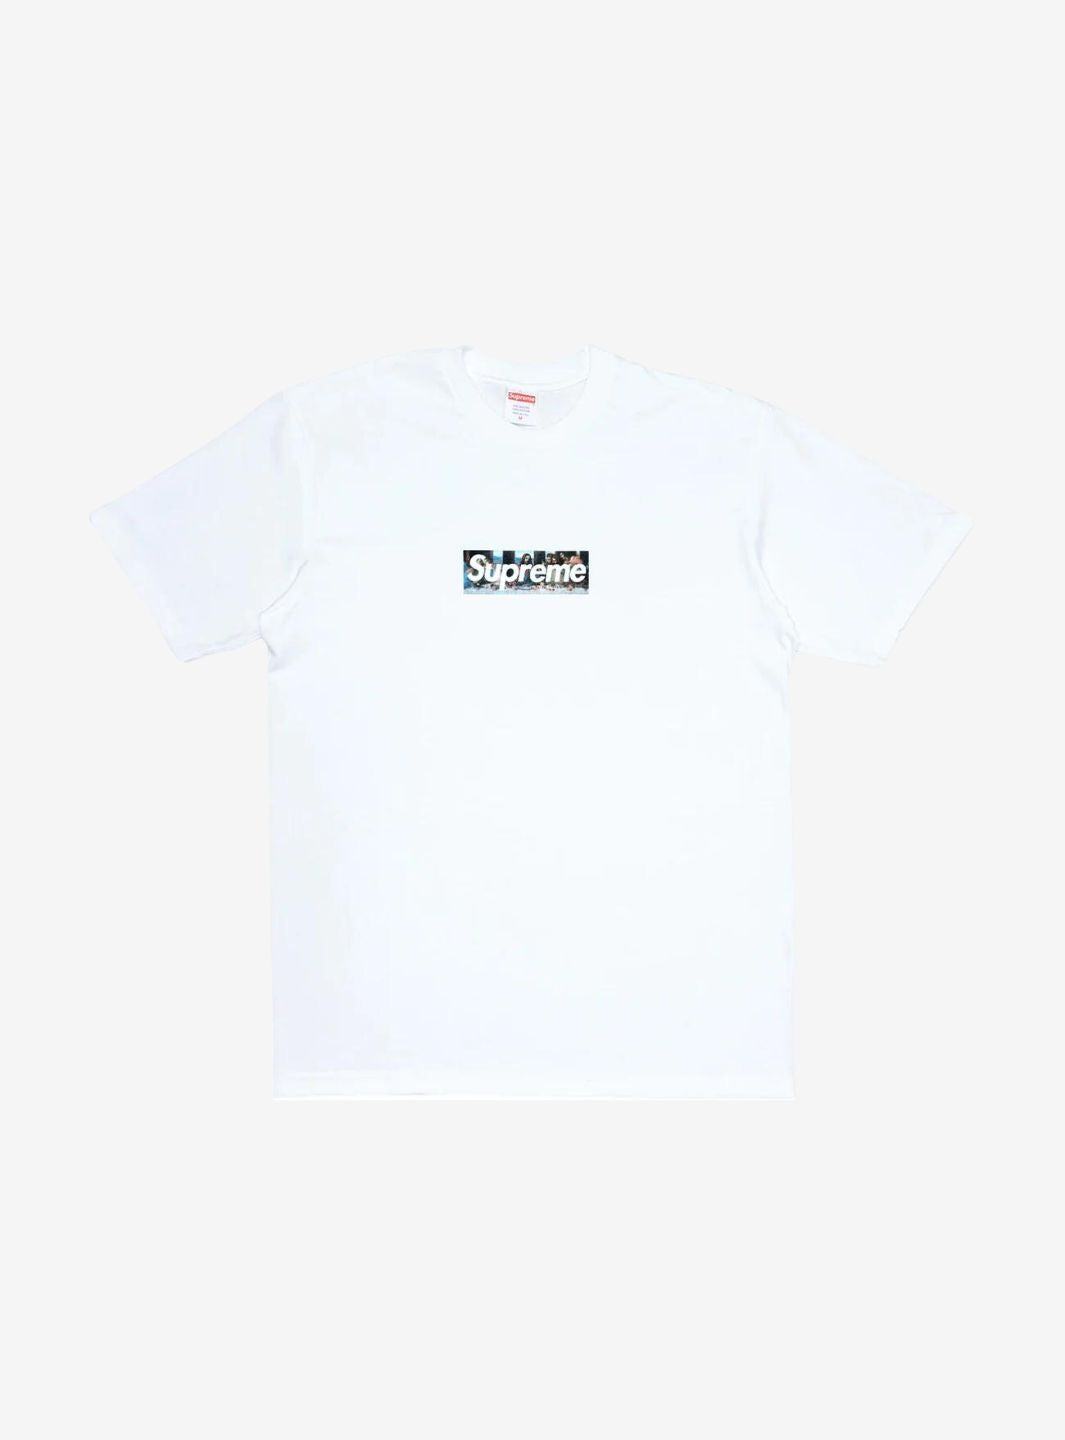 Supreme T-Shirt Box Logo Milan Store